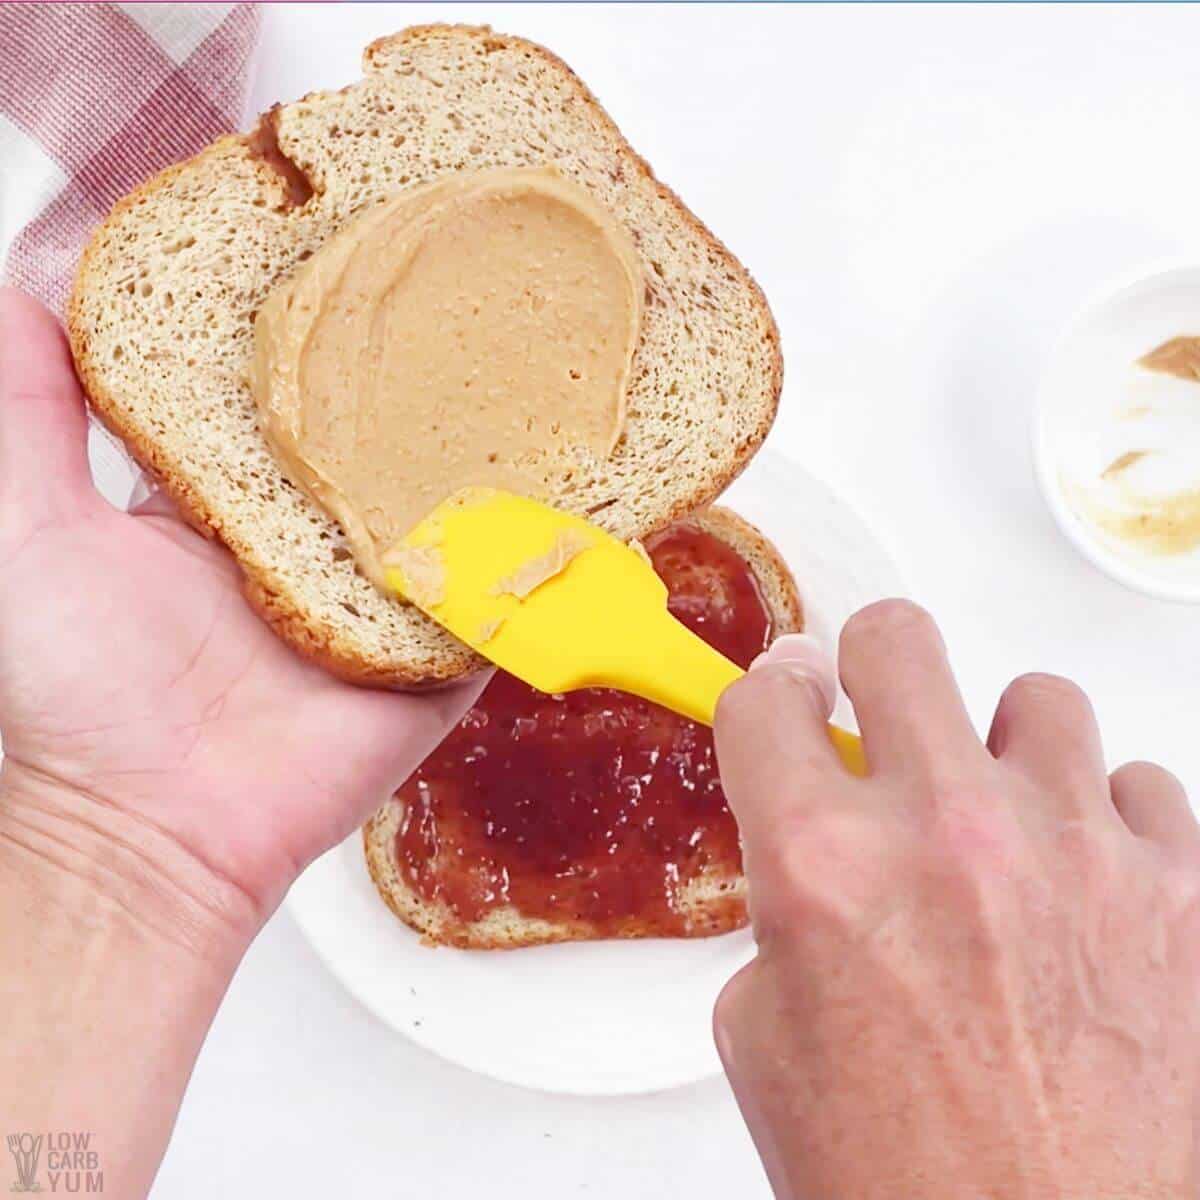 spreading peanut butter on bread slice.